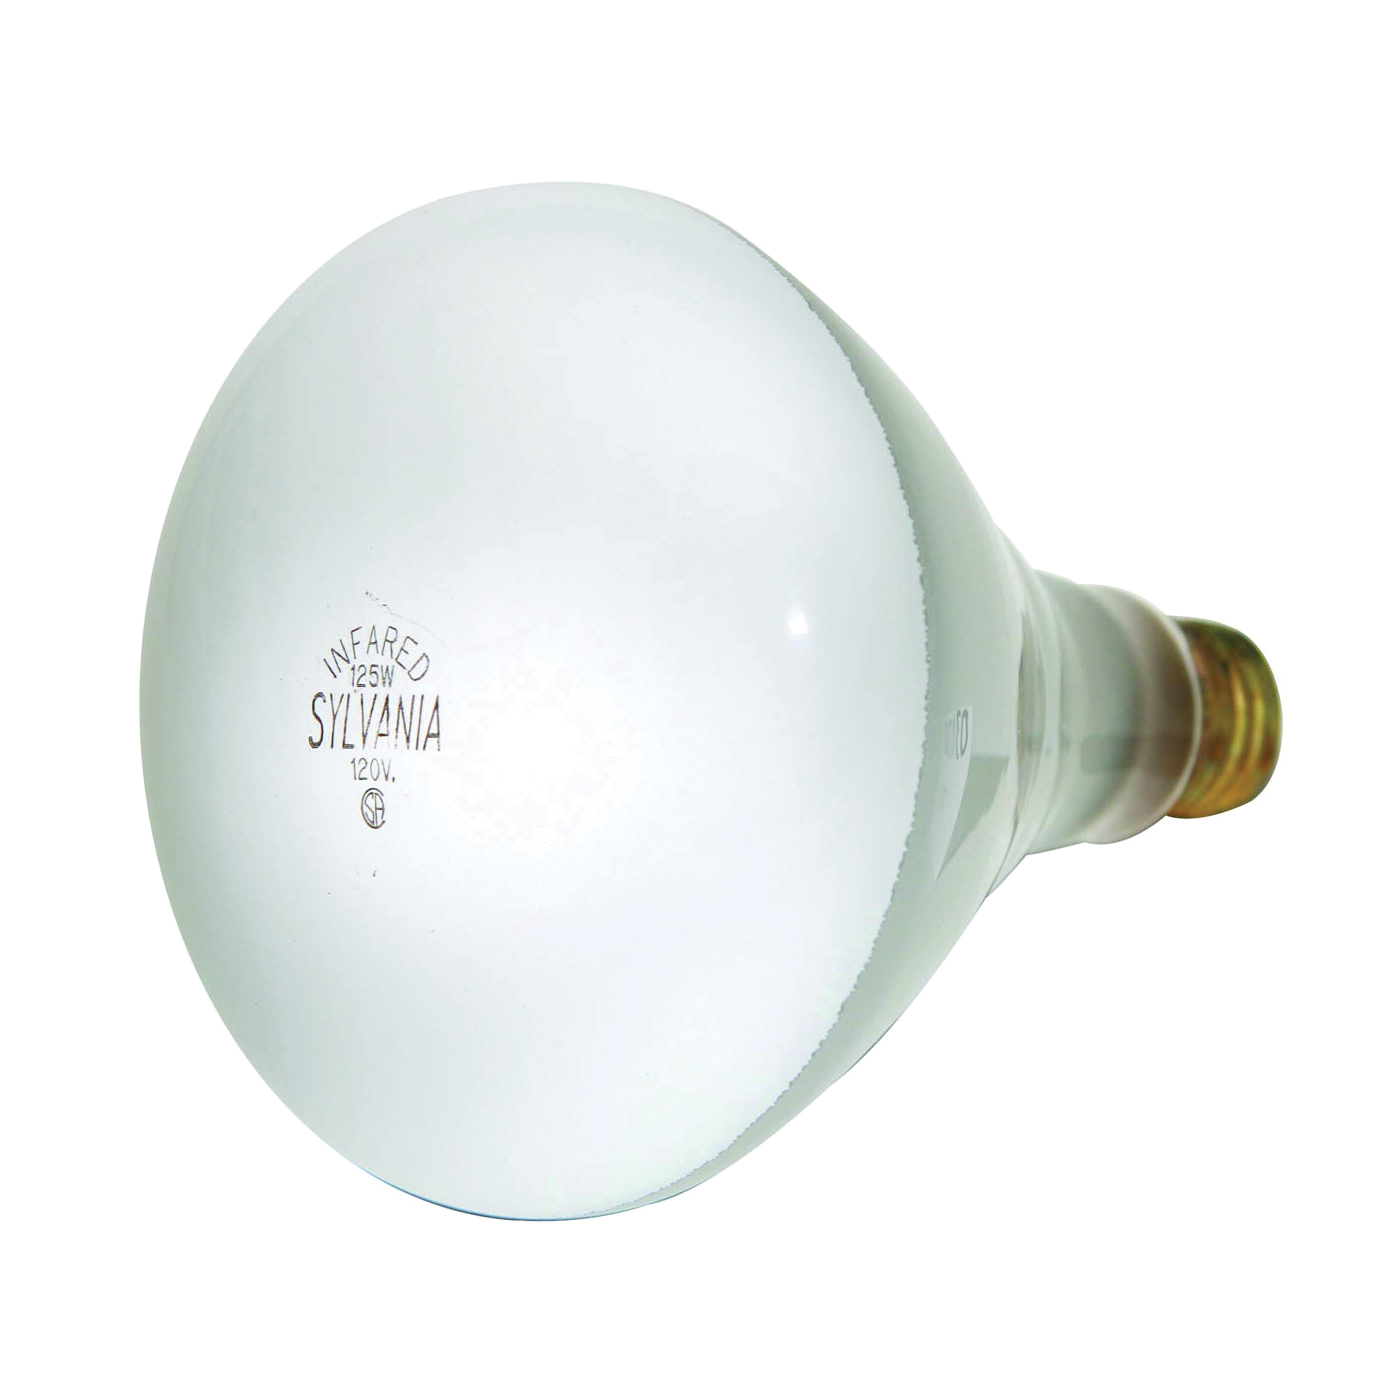 15451 Incandescent Lamp, 125 W, BR40 Lamp, Medium E26 Lamp Base, 1000 Lumens, 2850 K Color Temp